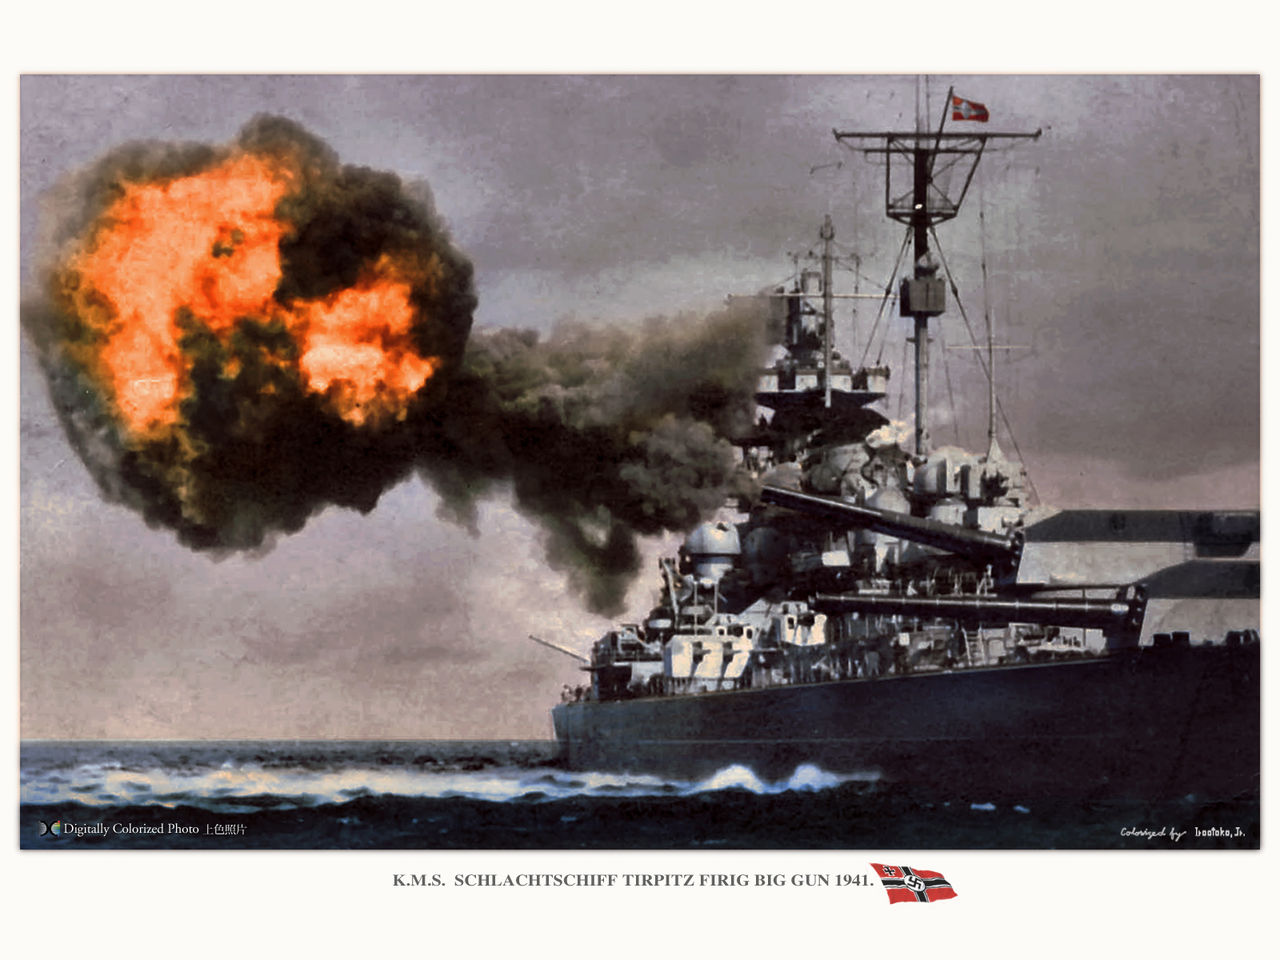 Bismarck fuiring her big guns in May 1941